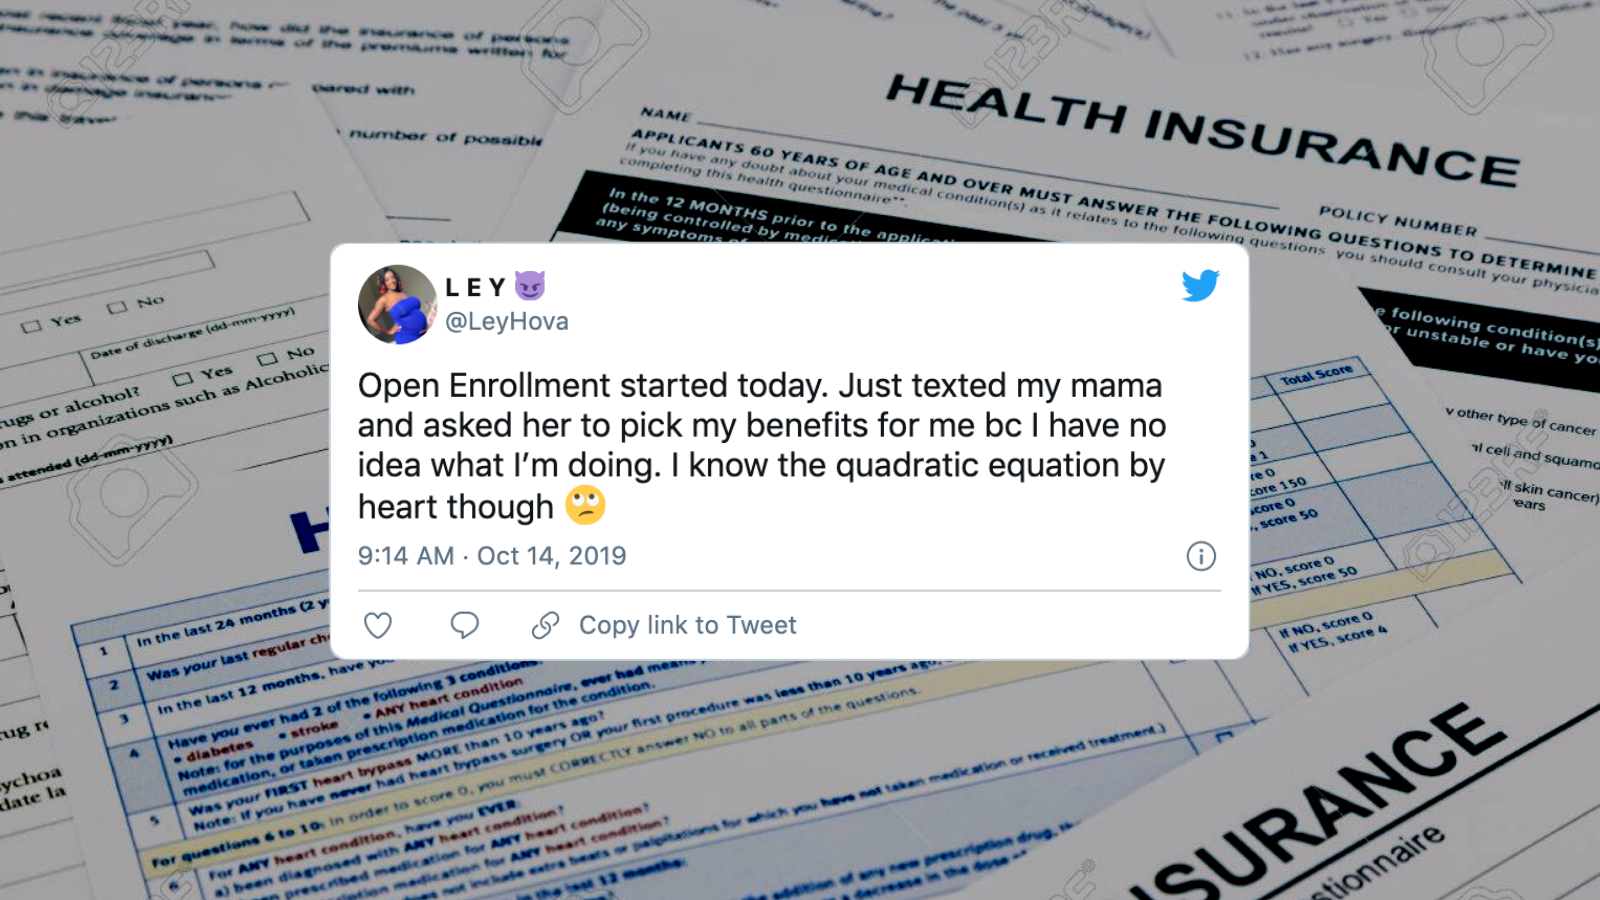 Employee tweet about open enrollment and choosing her benefits